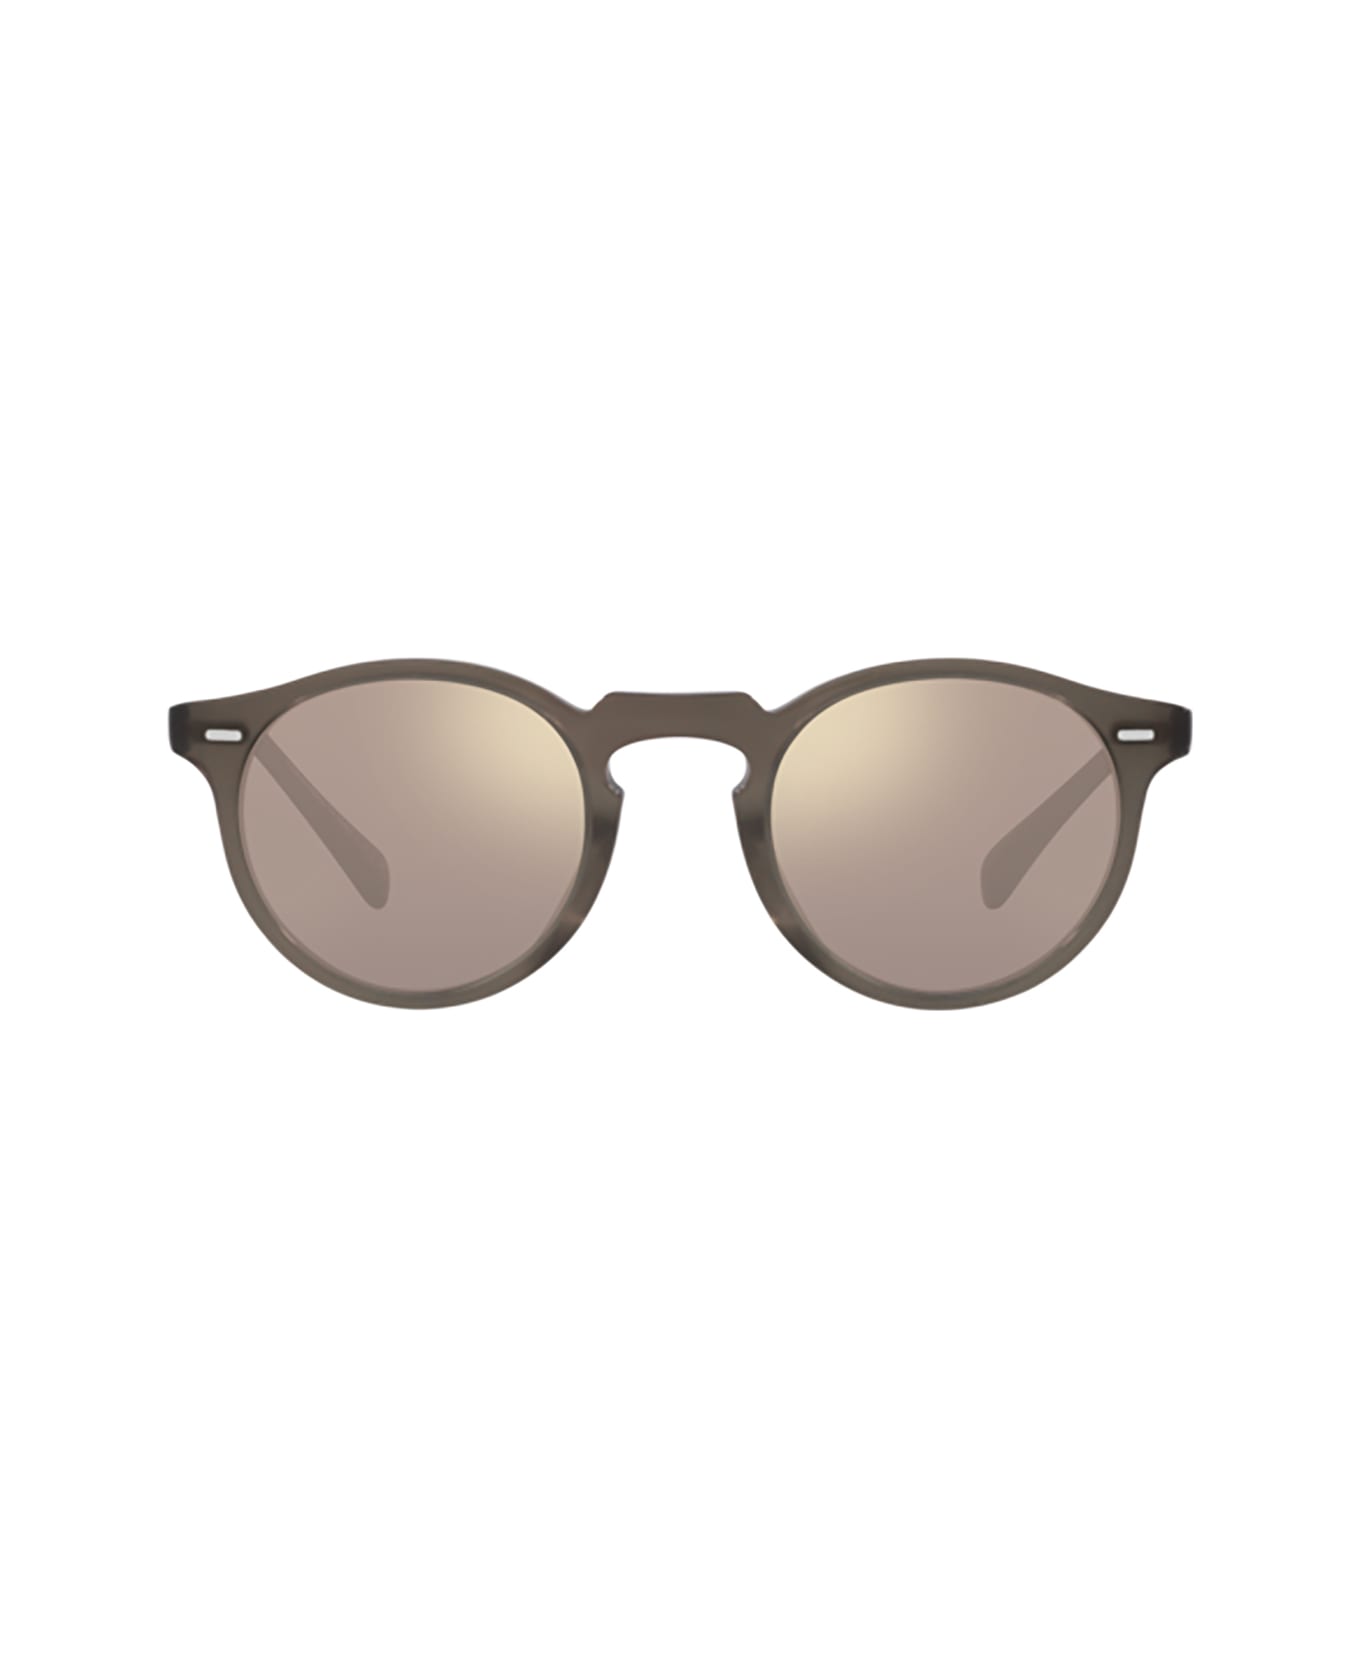 Oliver Peoples Ov5217s Taupe Sunglasses - Taupe サングラス